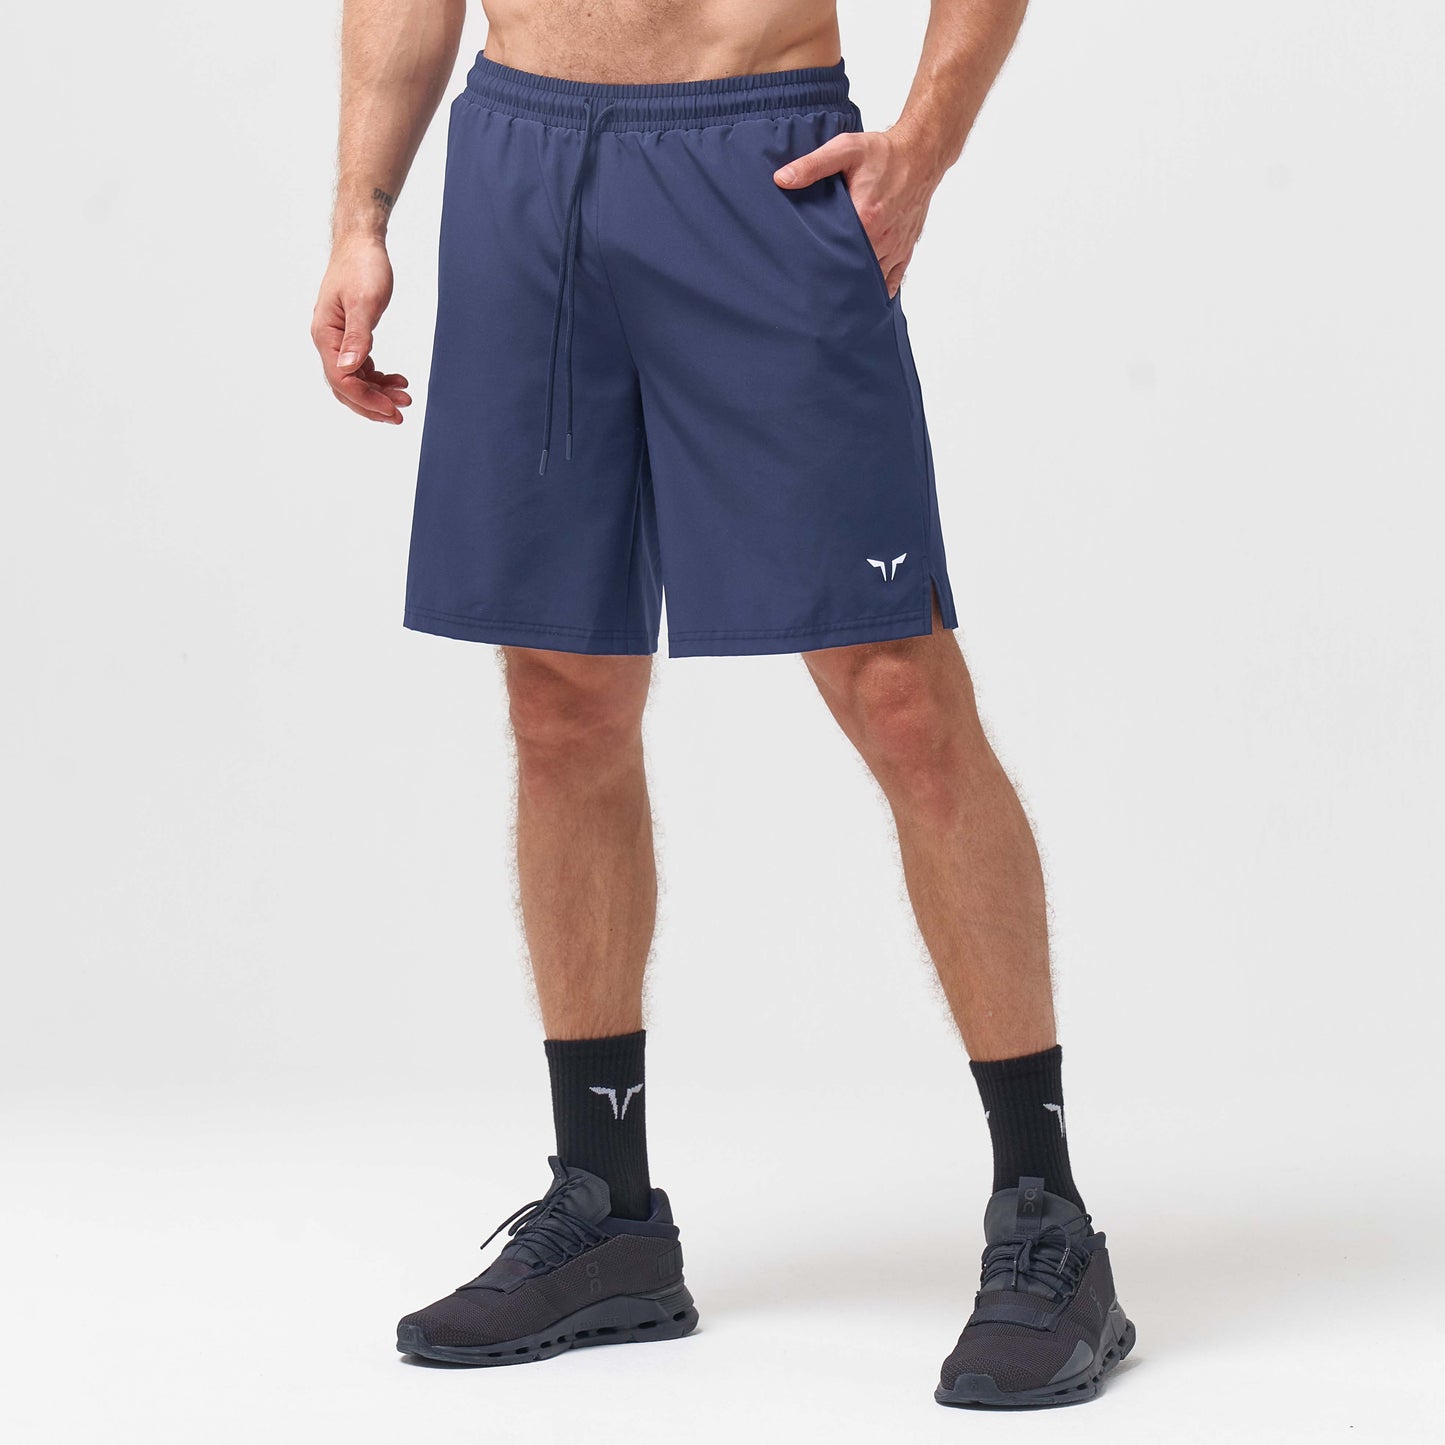 squatwolf-gym-wear-essential-9-inch-shorts-navy-workout-short-for-men